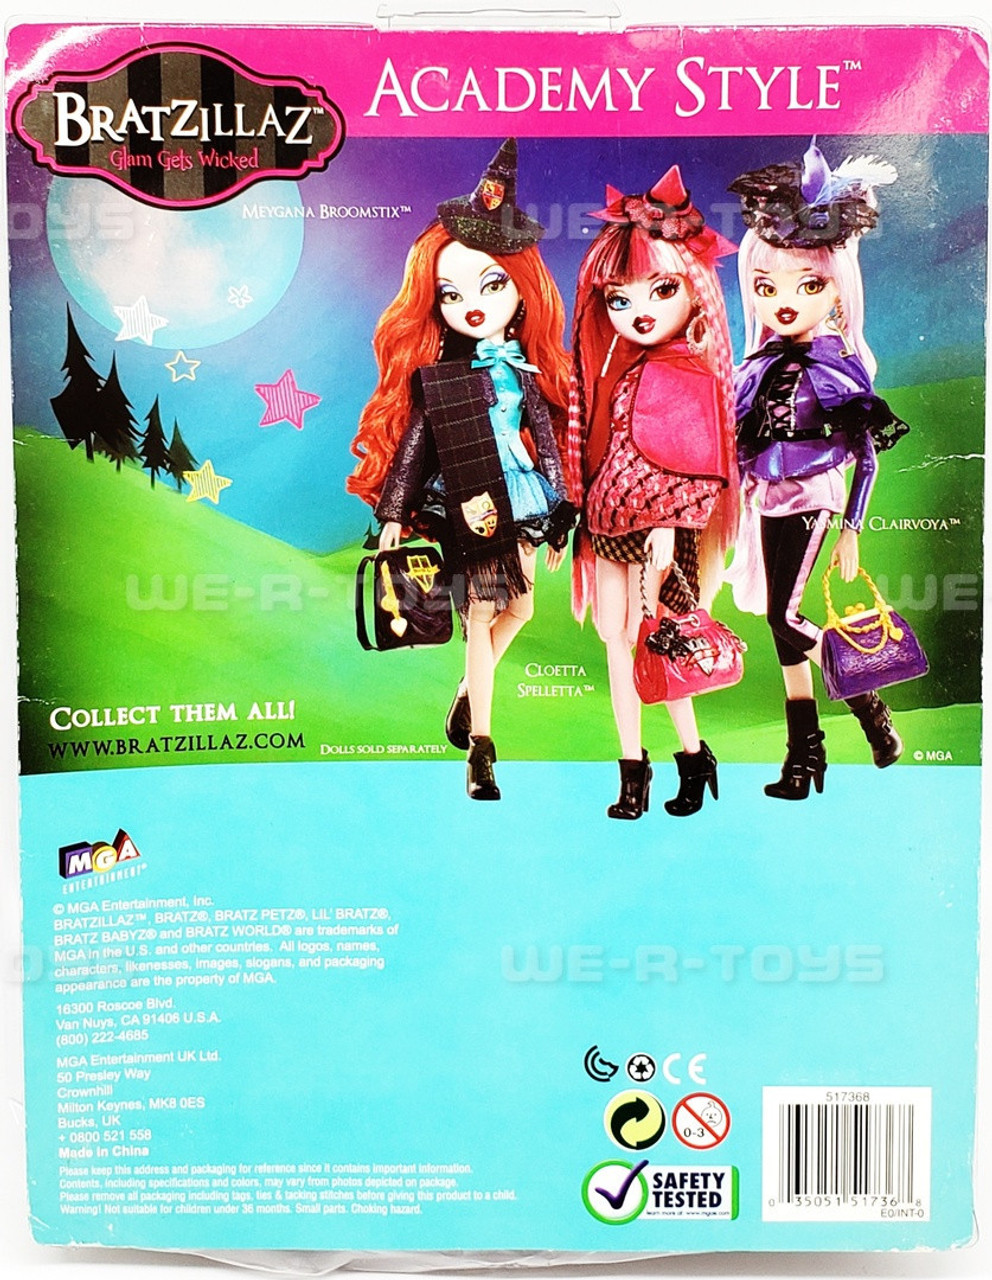 BRATZ Dolls Fashion Pack Bratzillaz Charmed Life Academy Style Meygana  Broomstix Accessories 